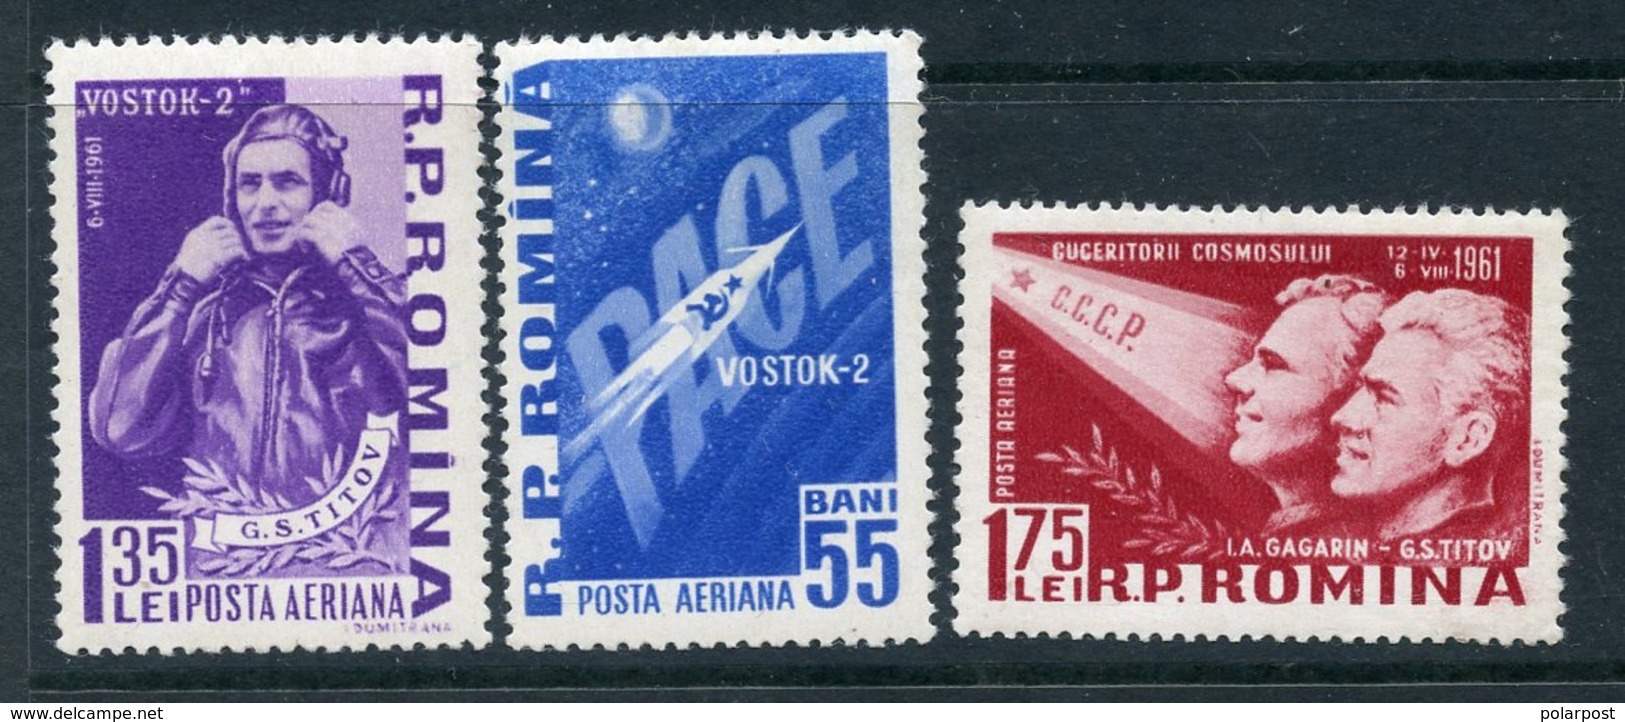 Y85 ROMANIA 1961 1994-1996 German Titov. Flight Of The Spacecraft "VOSTOK-2". Space - Europe